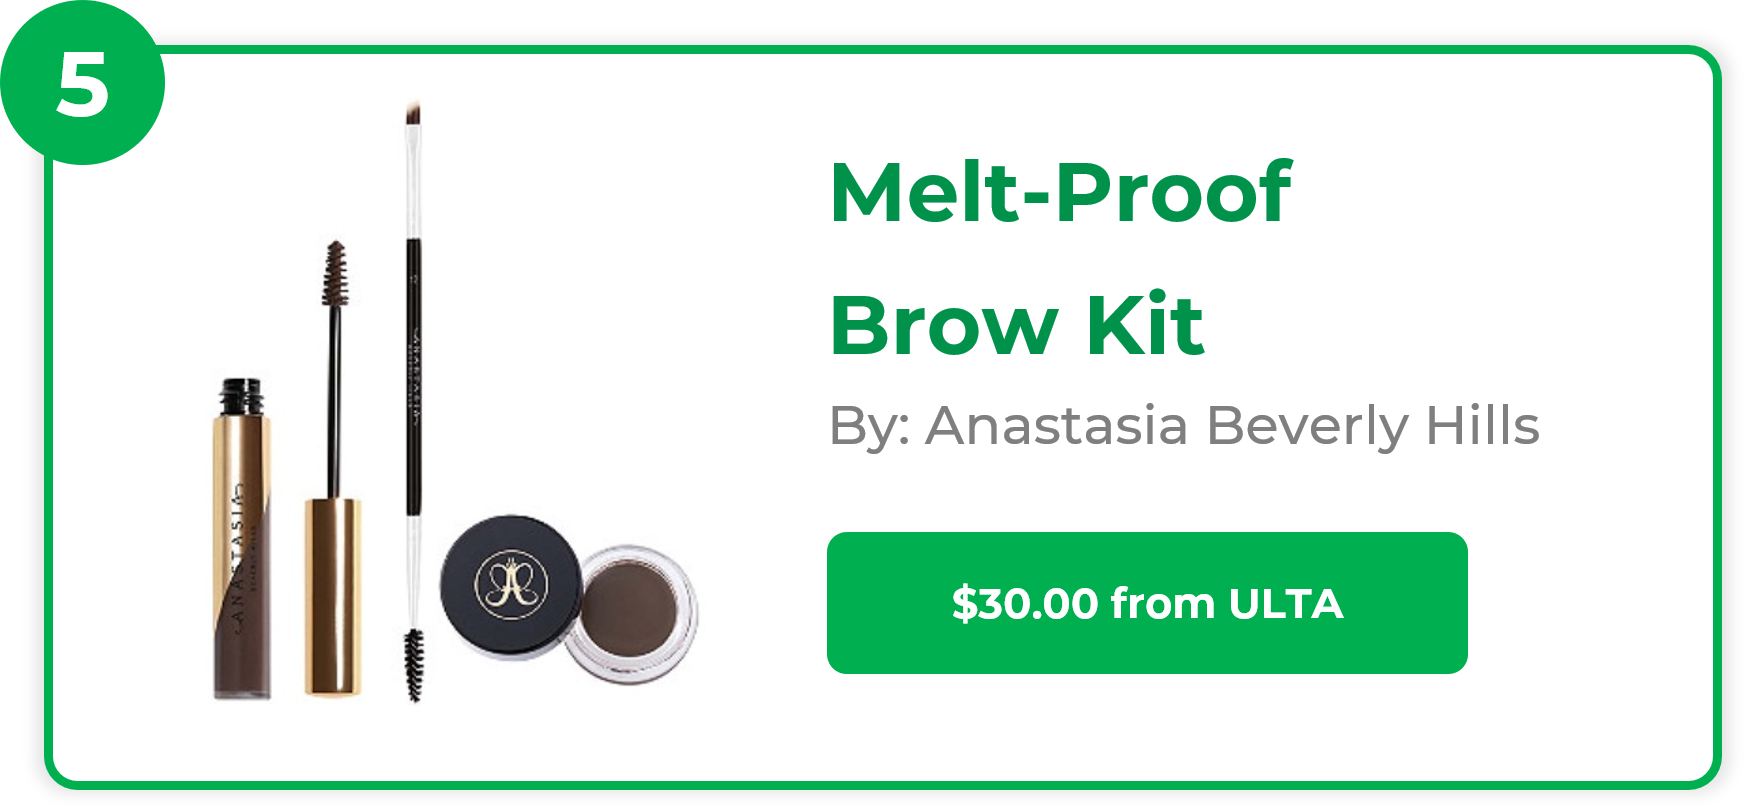 Melt-Proof Brow Kit - Anastasia Beverly Hills